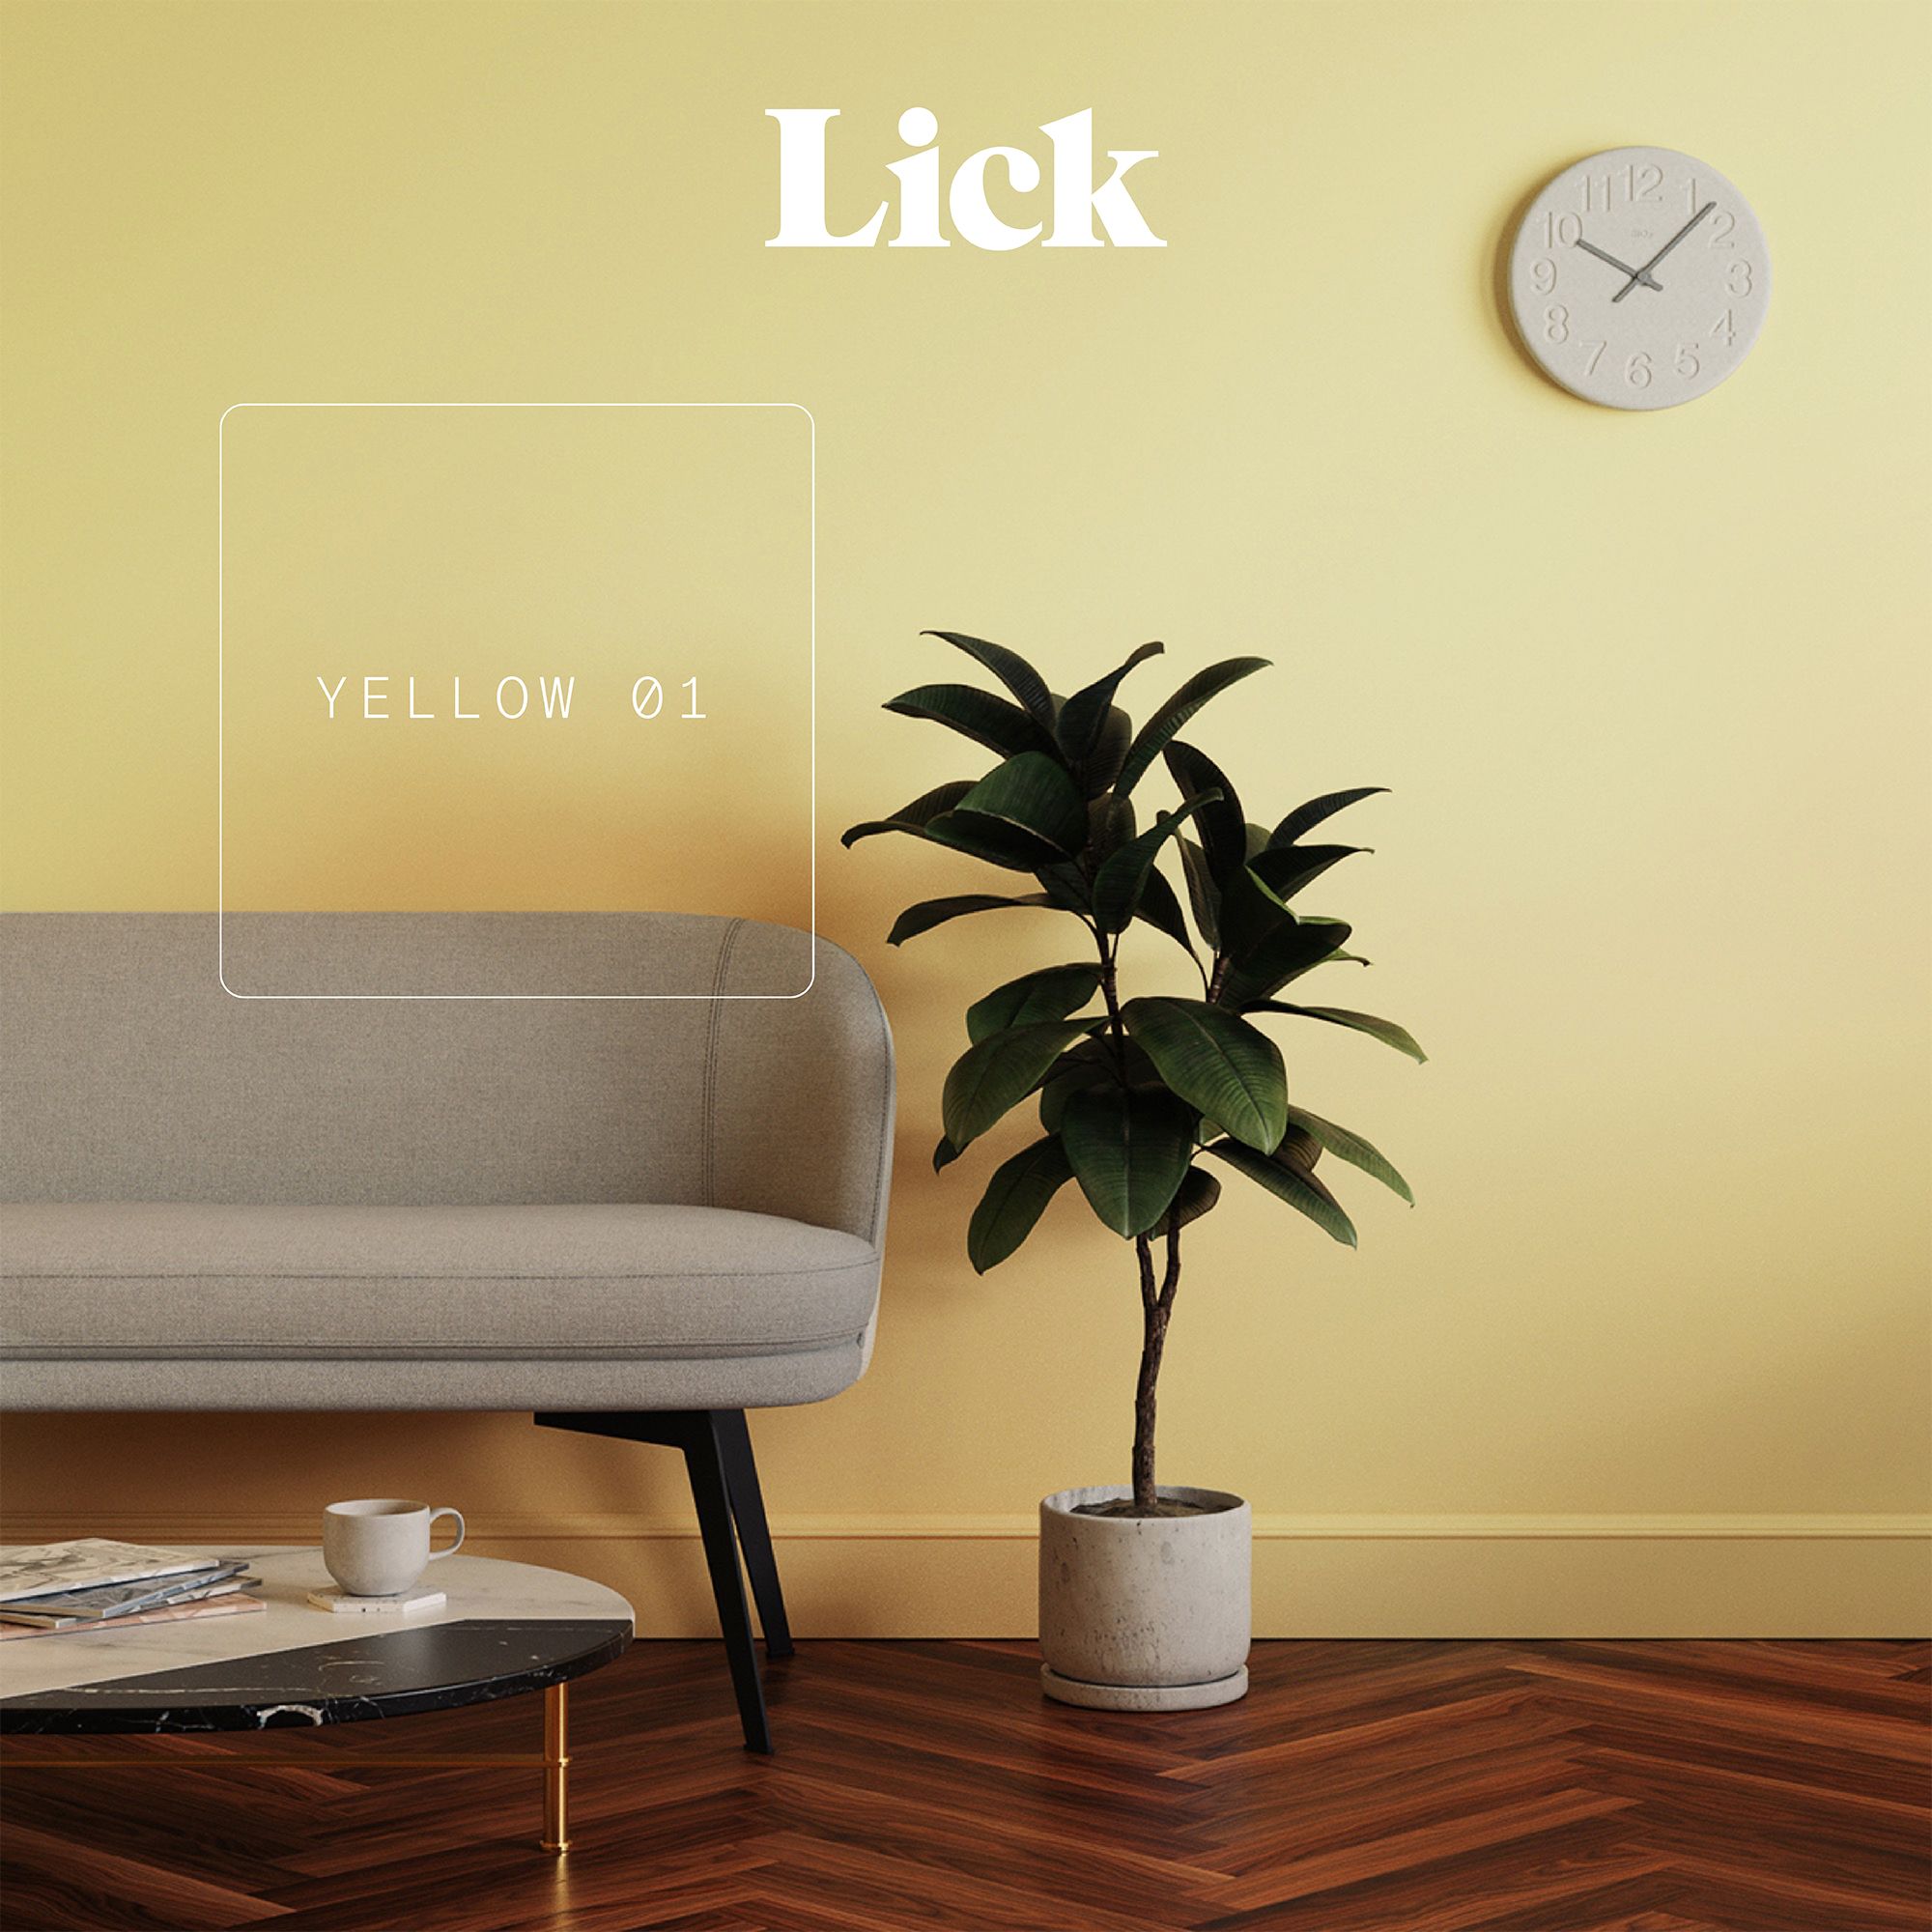 Lick Yellow 01 Matt Emulsion paint, 2.5L